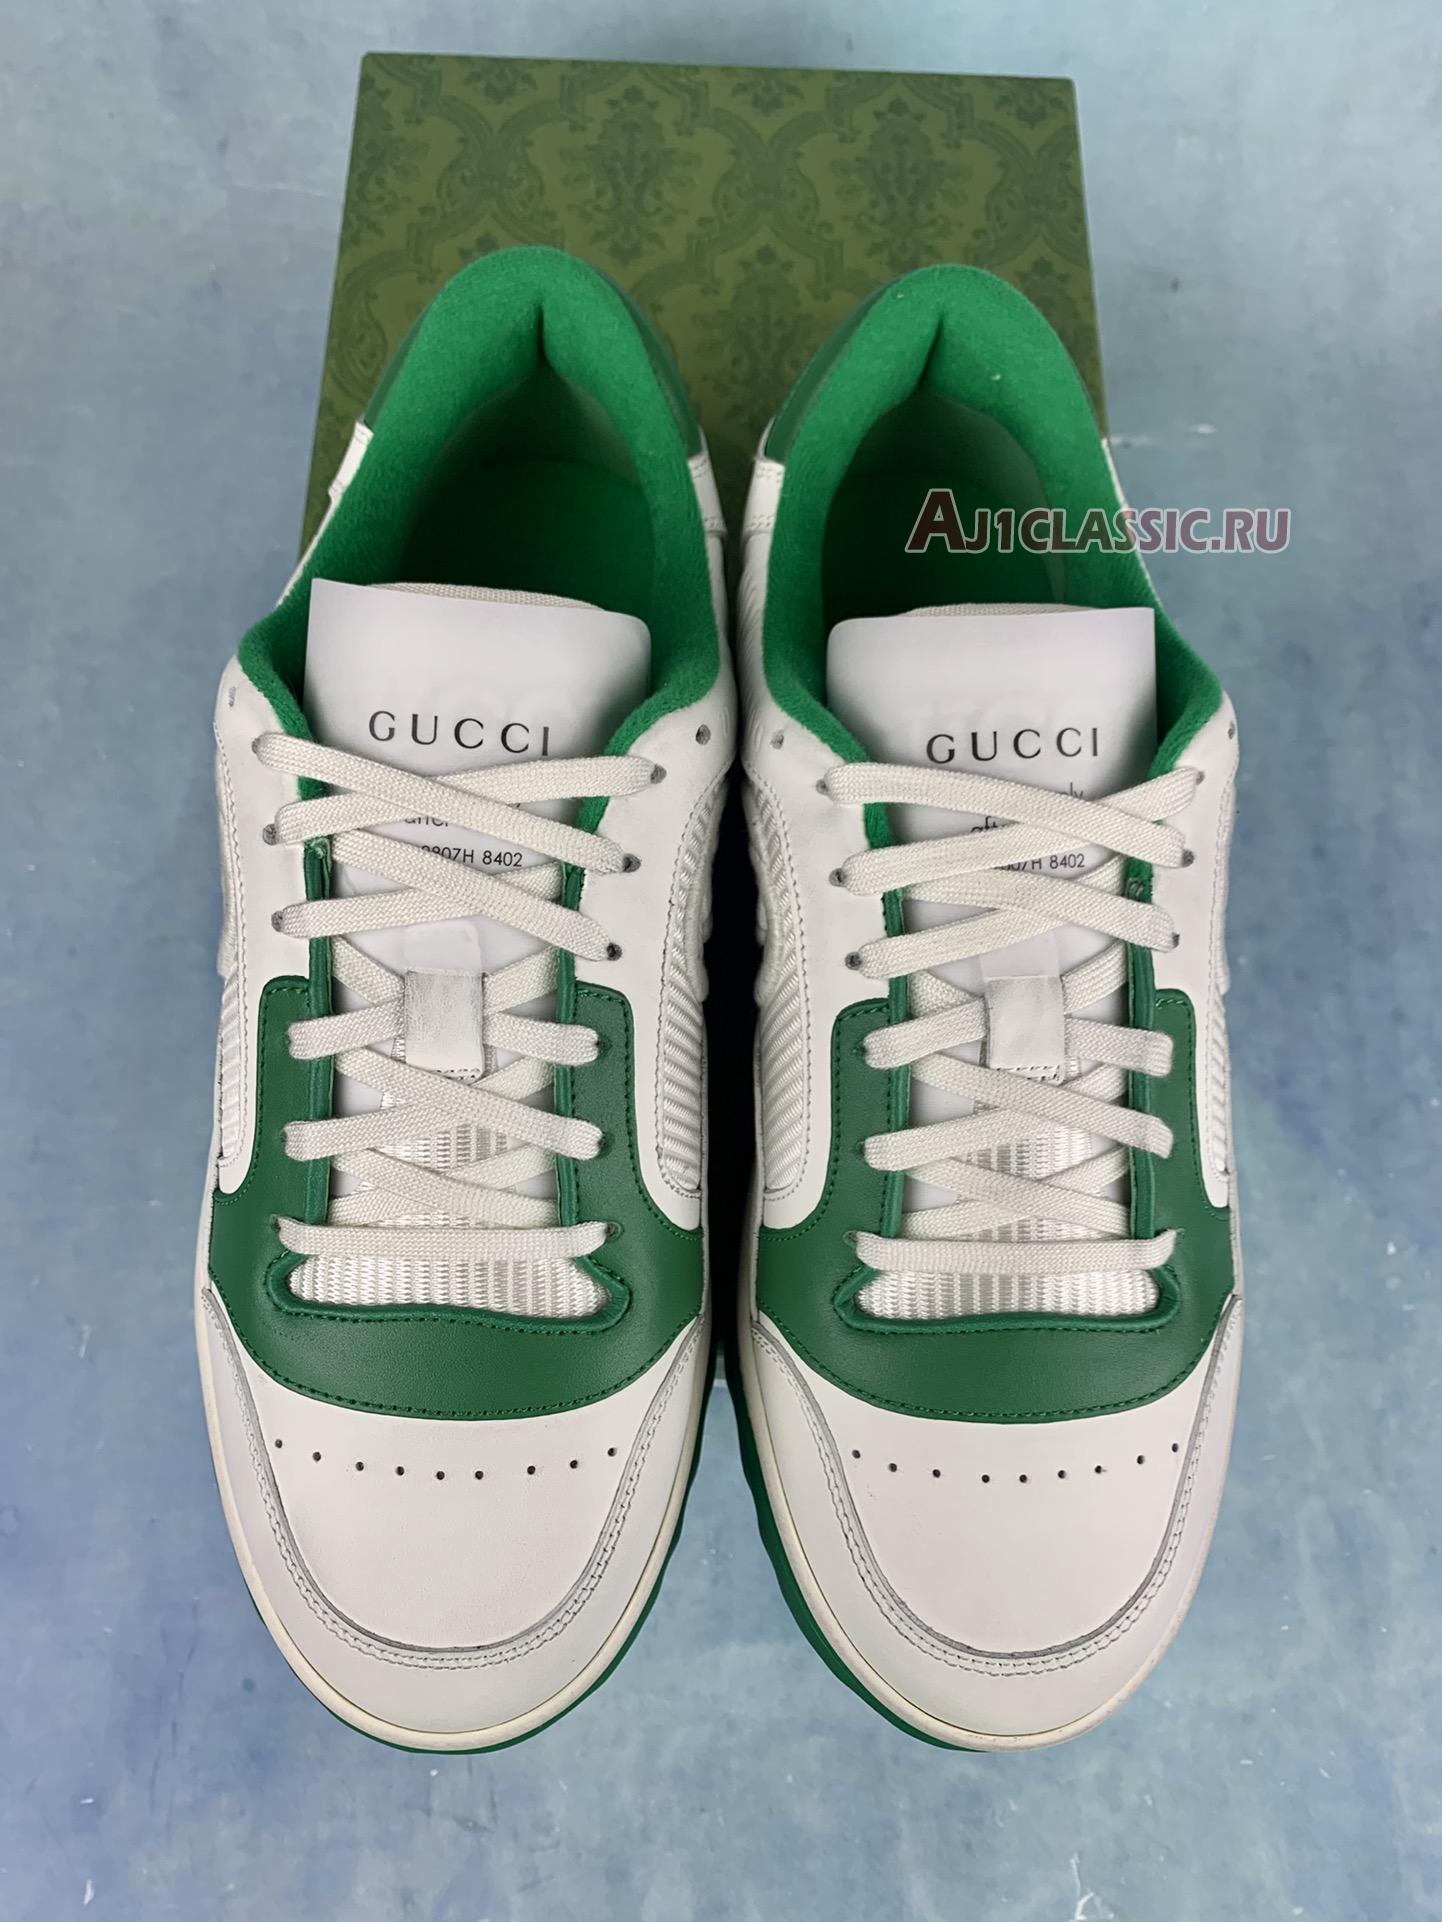 Gucci MAC80 Sneaker "Off White Green" 749896 AAB79 9148